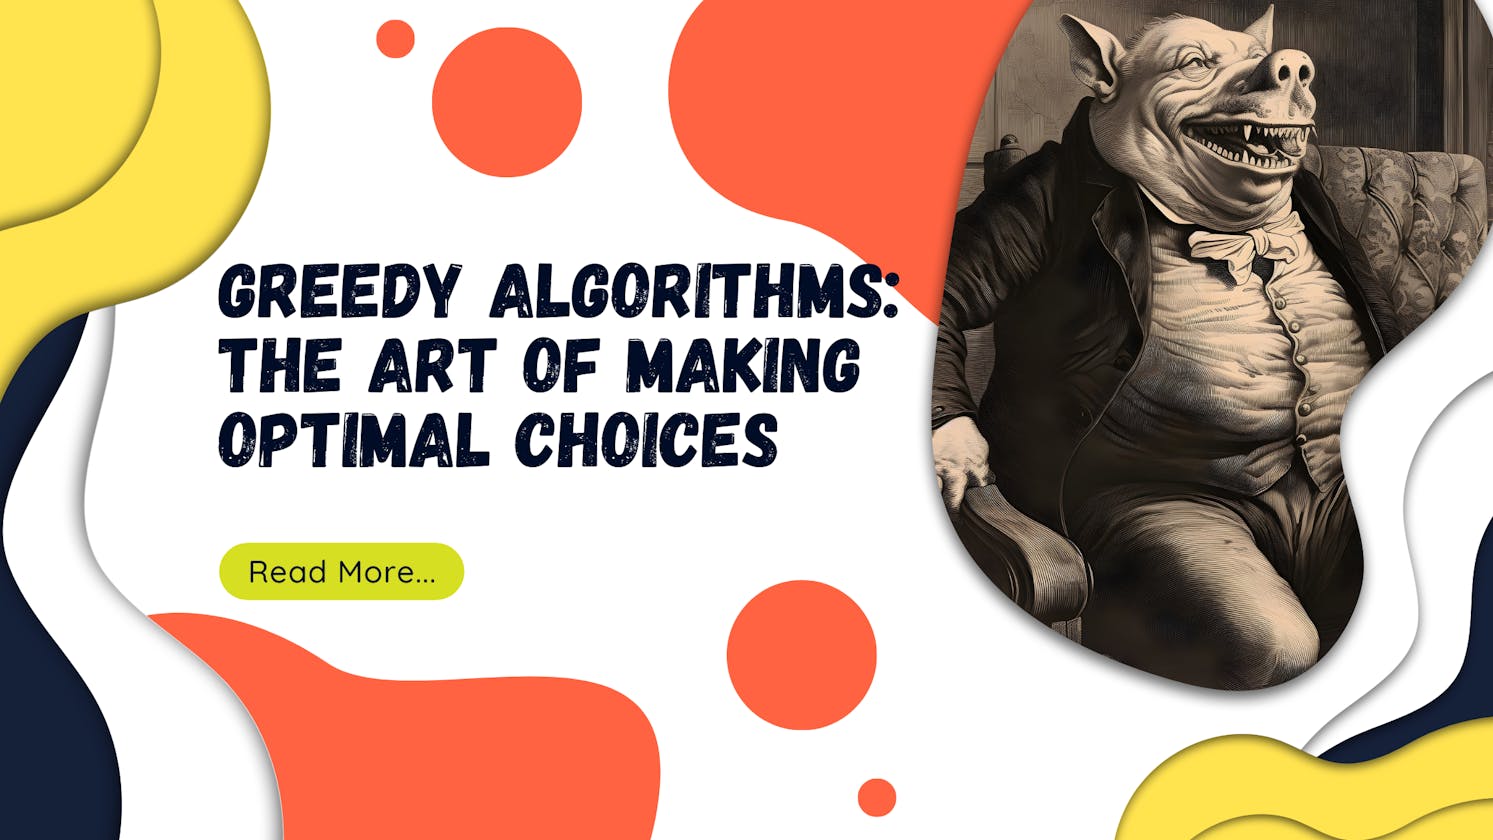 Greedy Algorithms and Optimization Problems